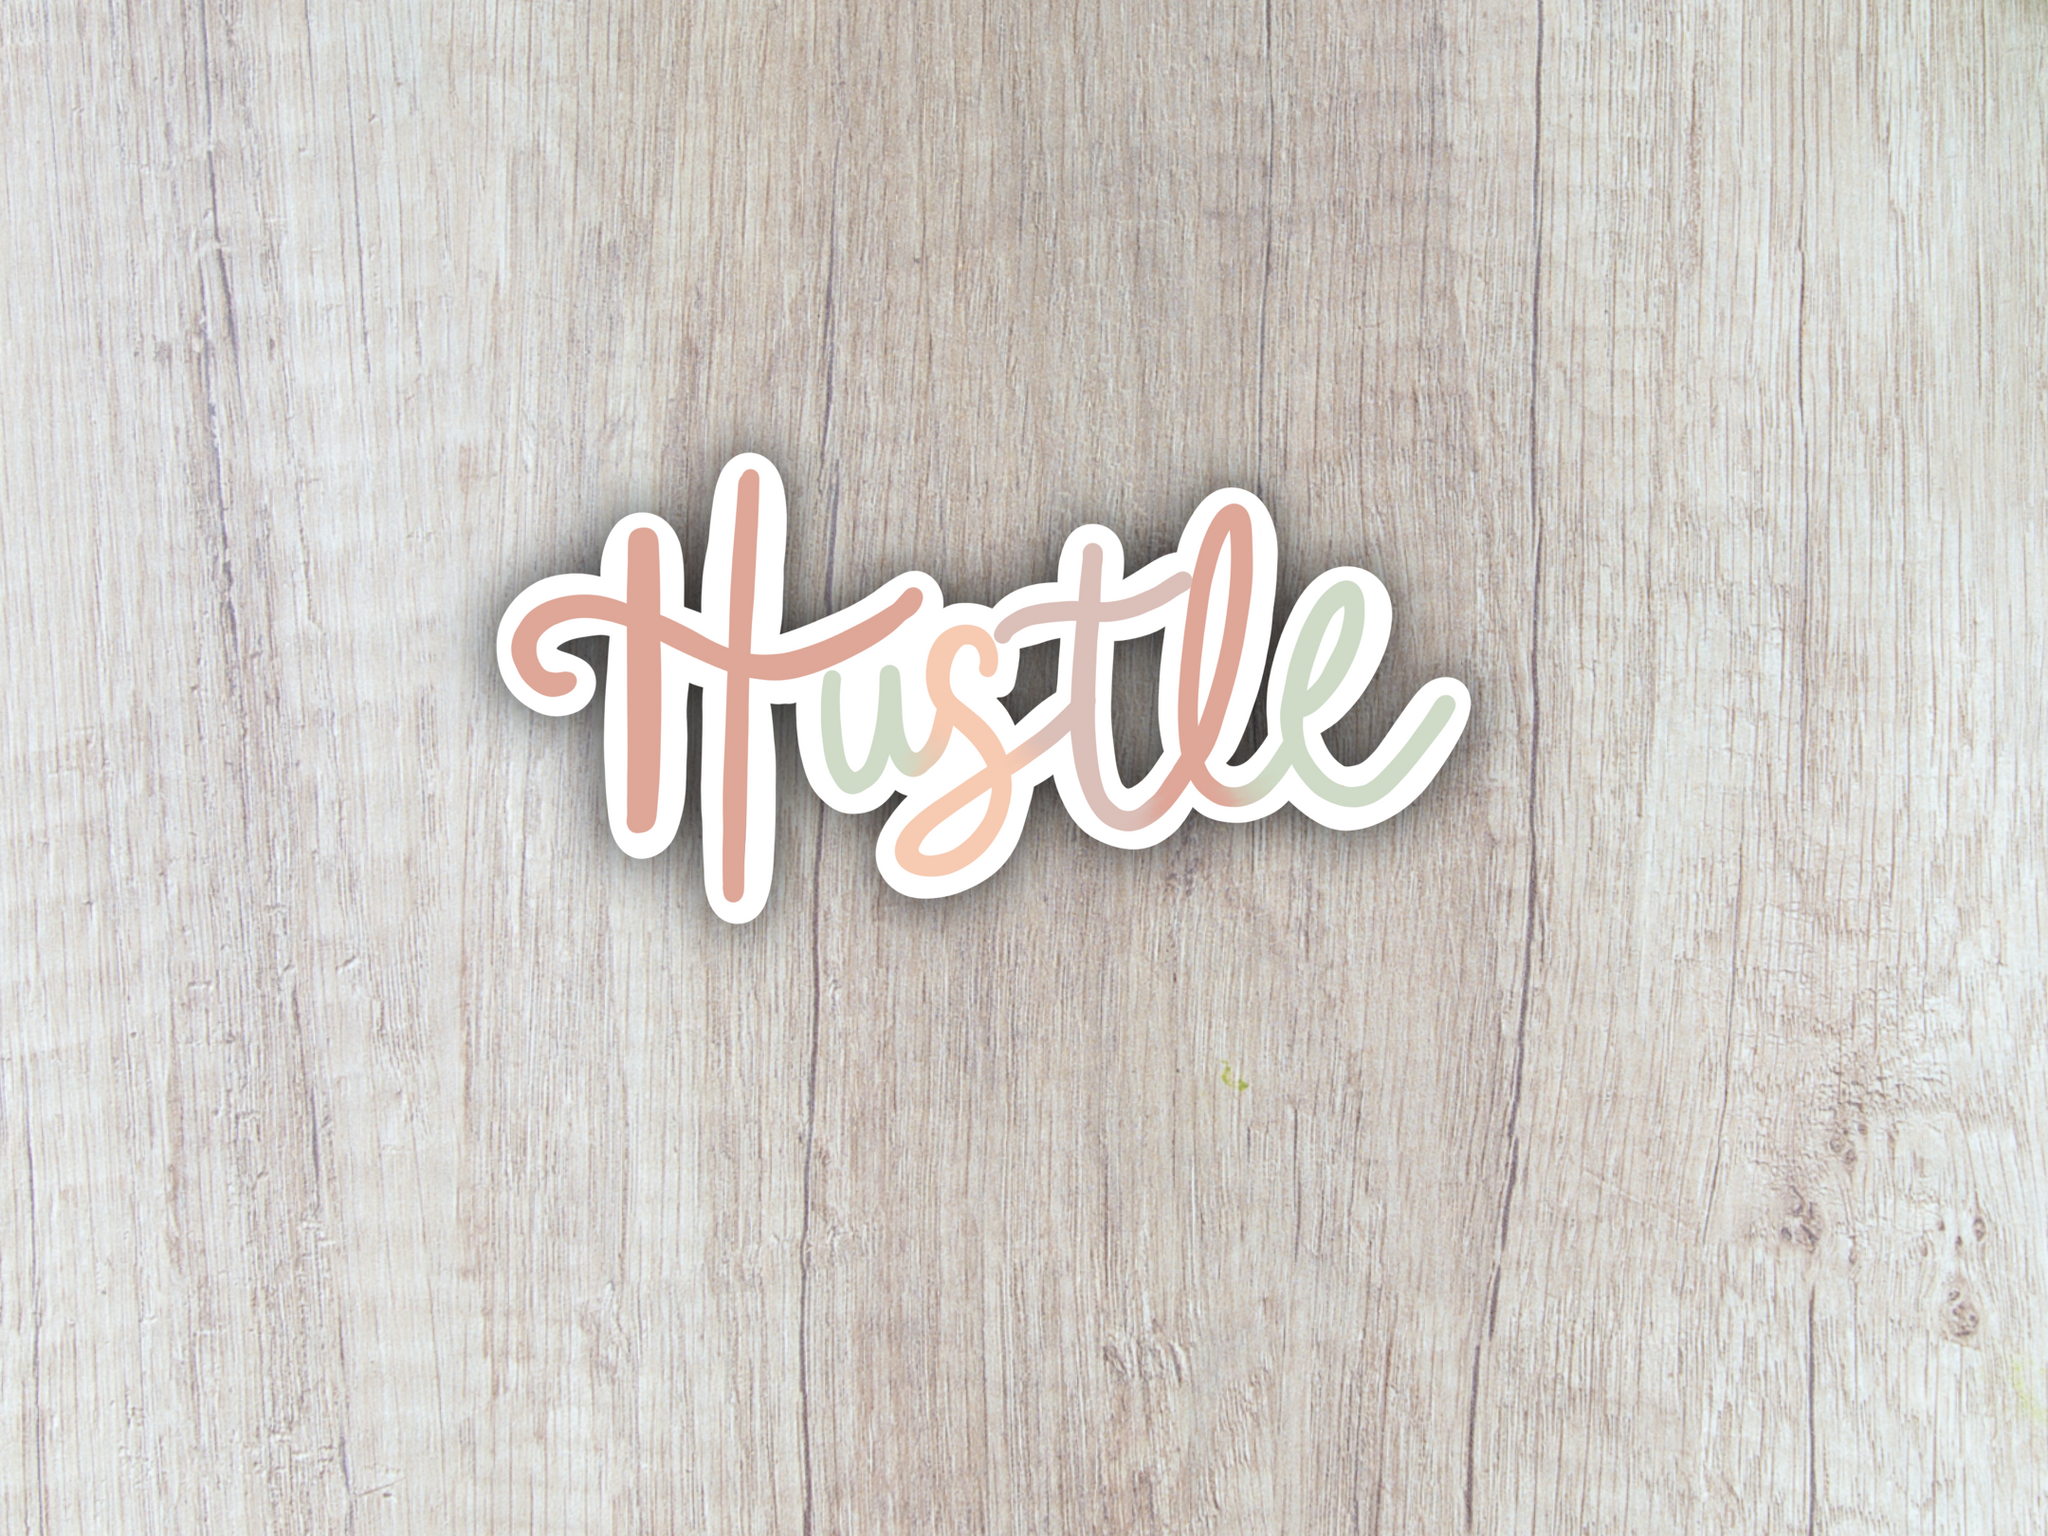 “Hustle” Sticker